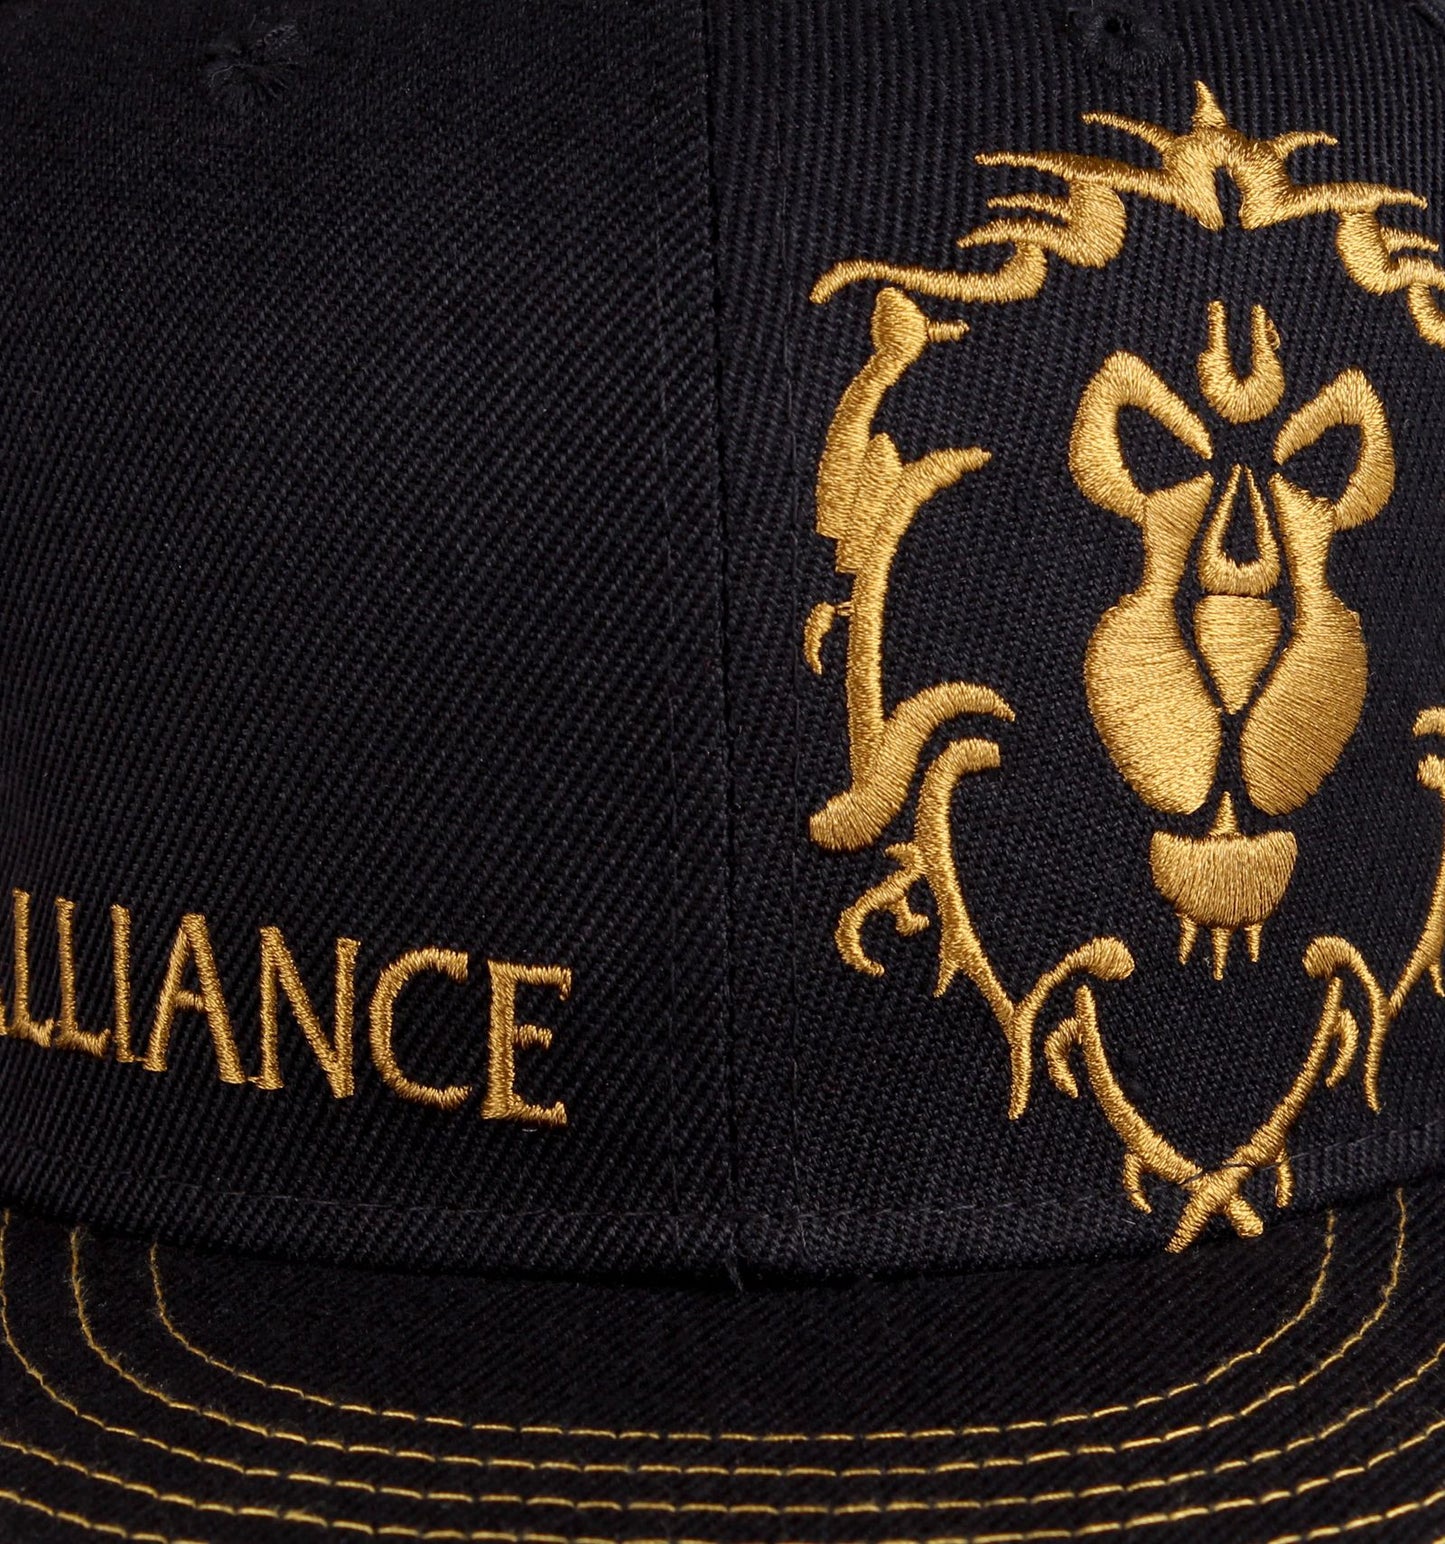 World of Warcraft Cap - Alliance Logo